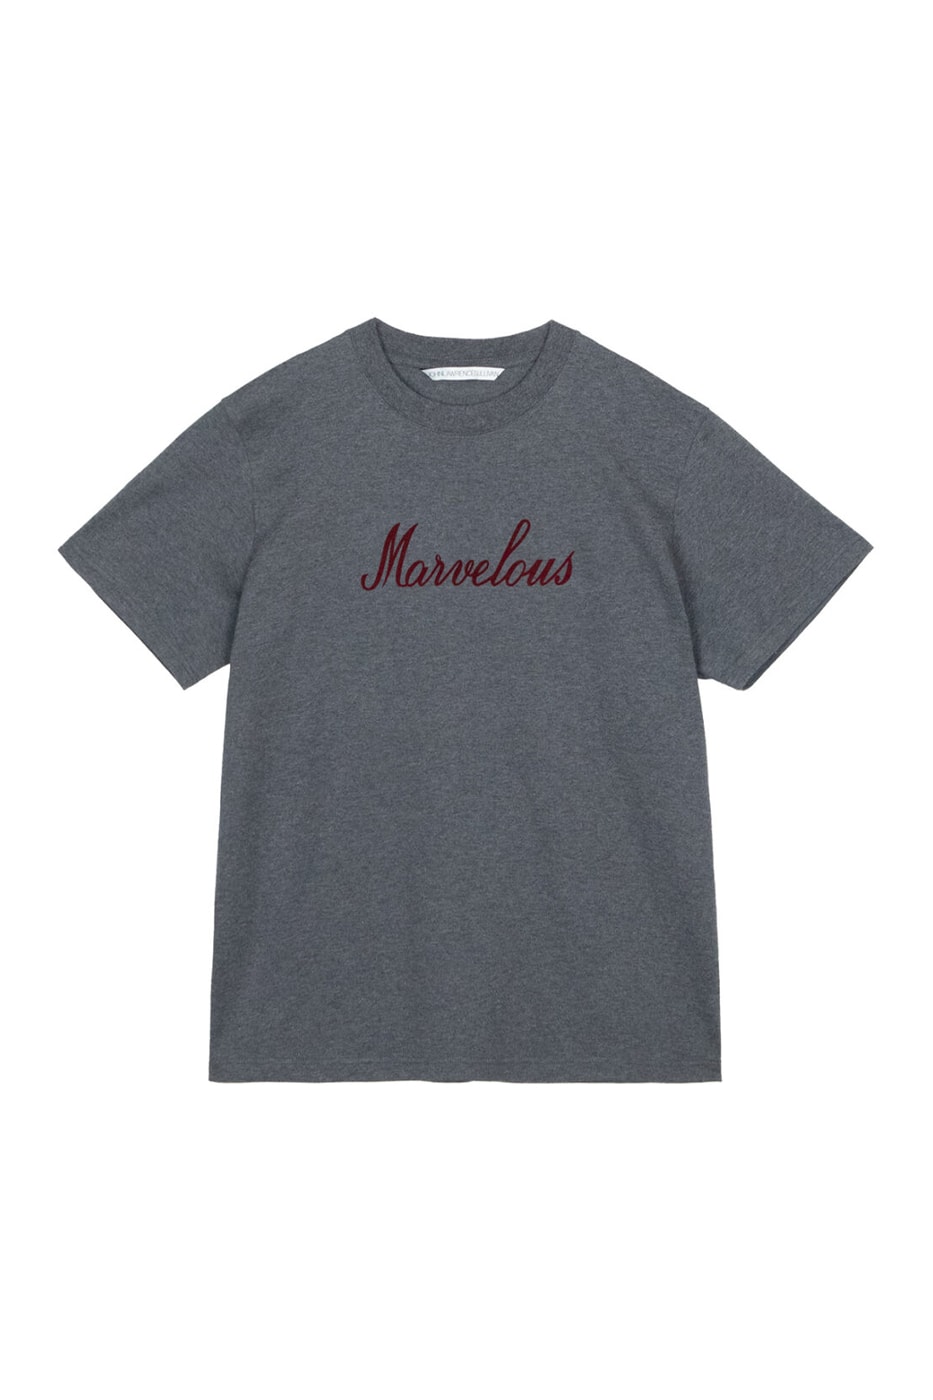 Sports t-shirt - Lawrence, Everlast 